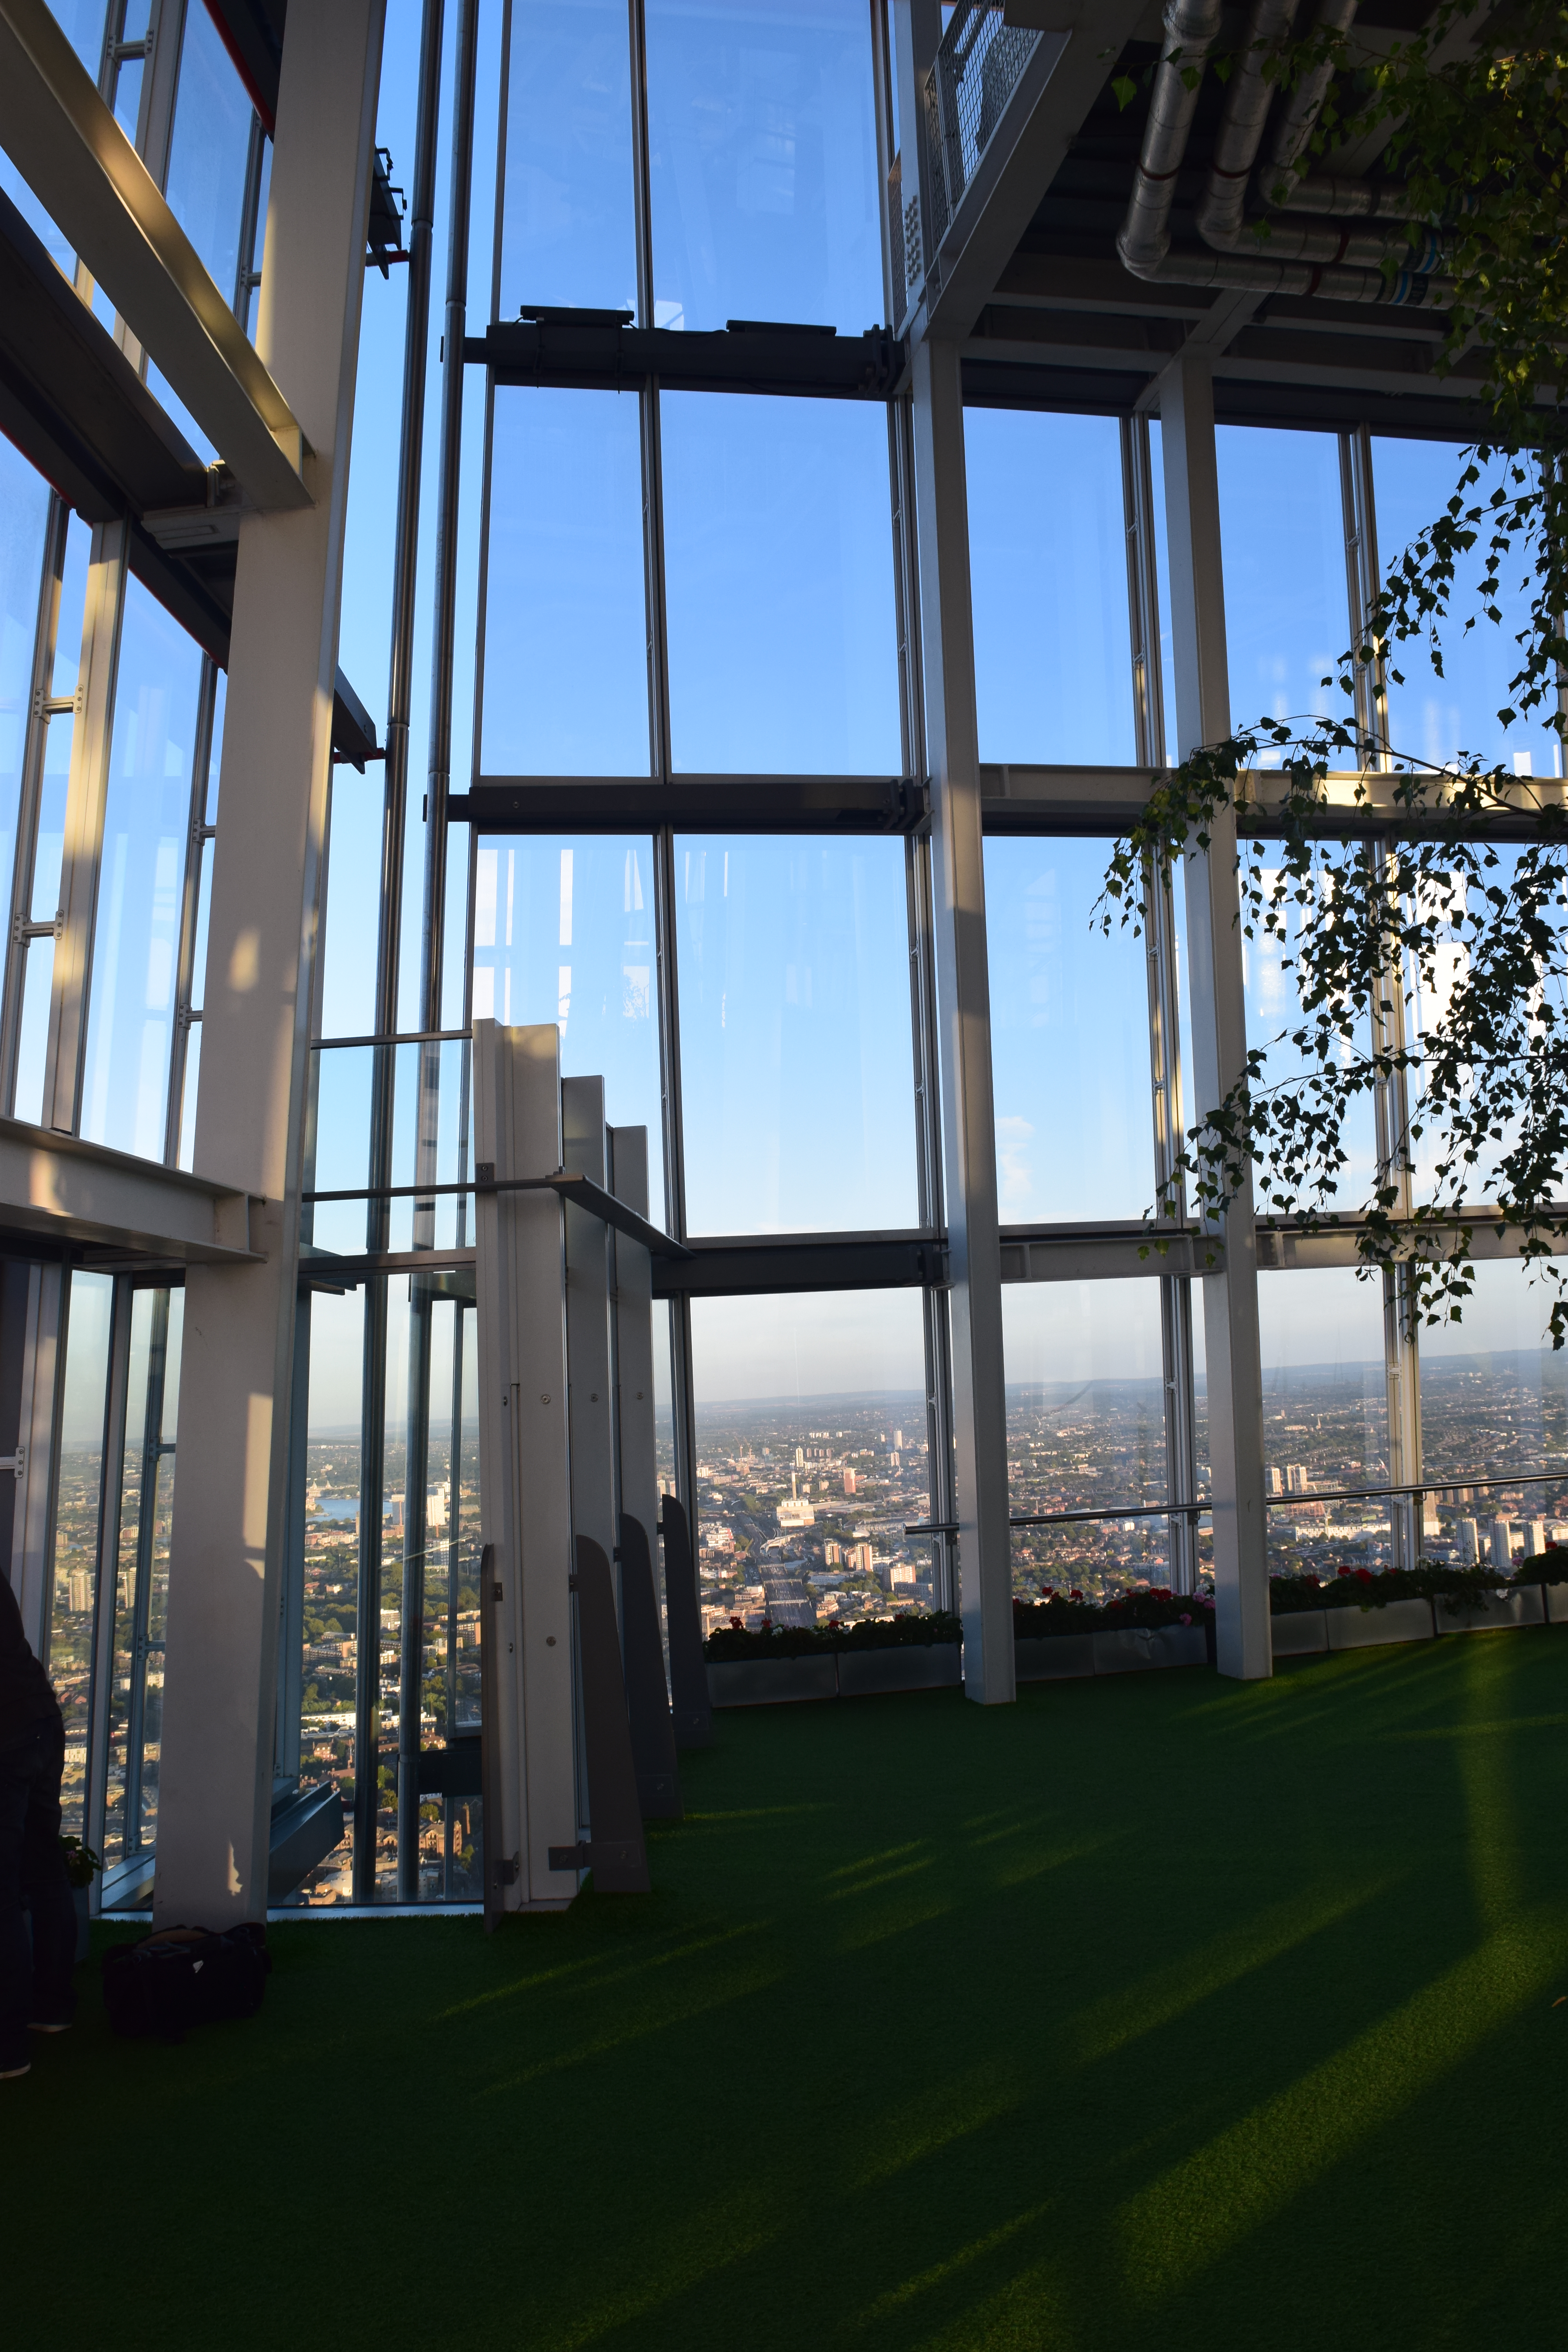 The Shard 70th floor observation deck